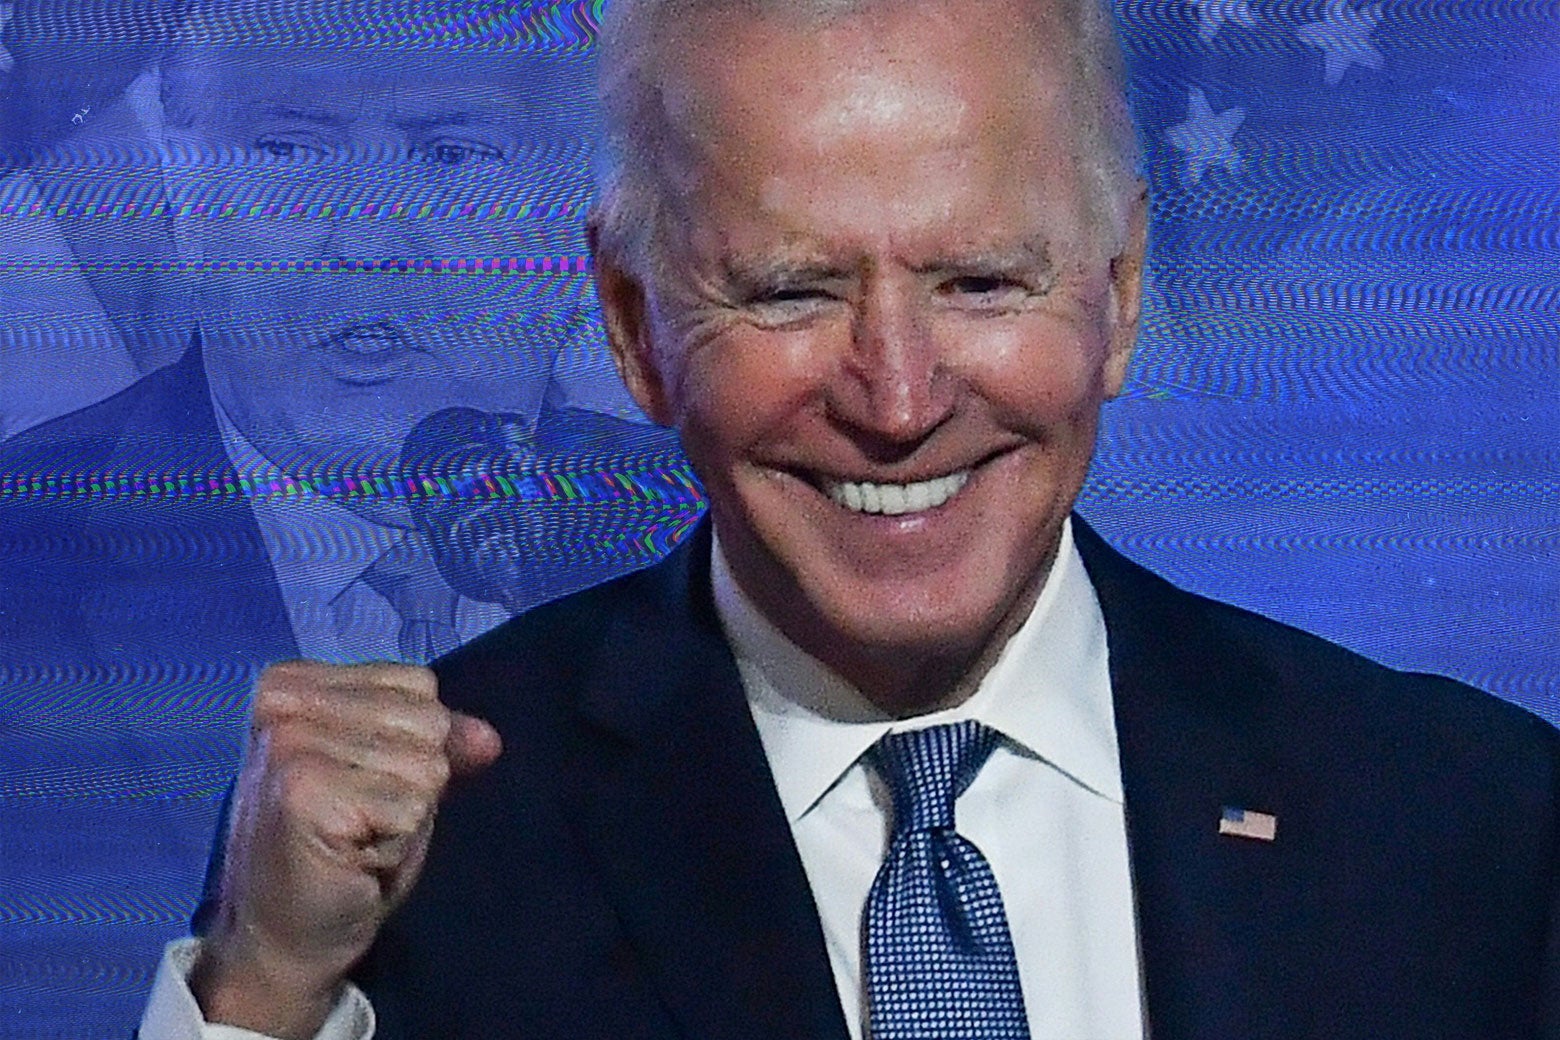 Joe Biden with an image of Donald Trump over this shoulder.